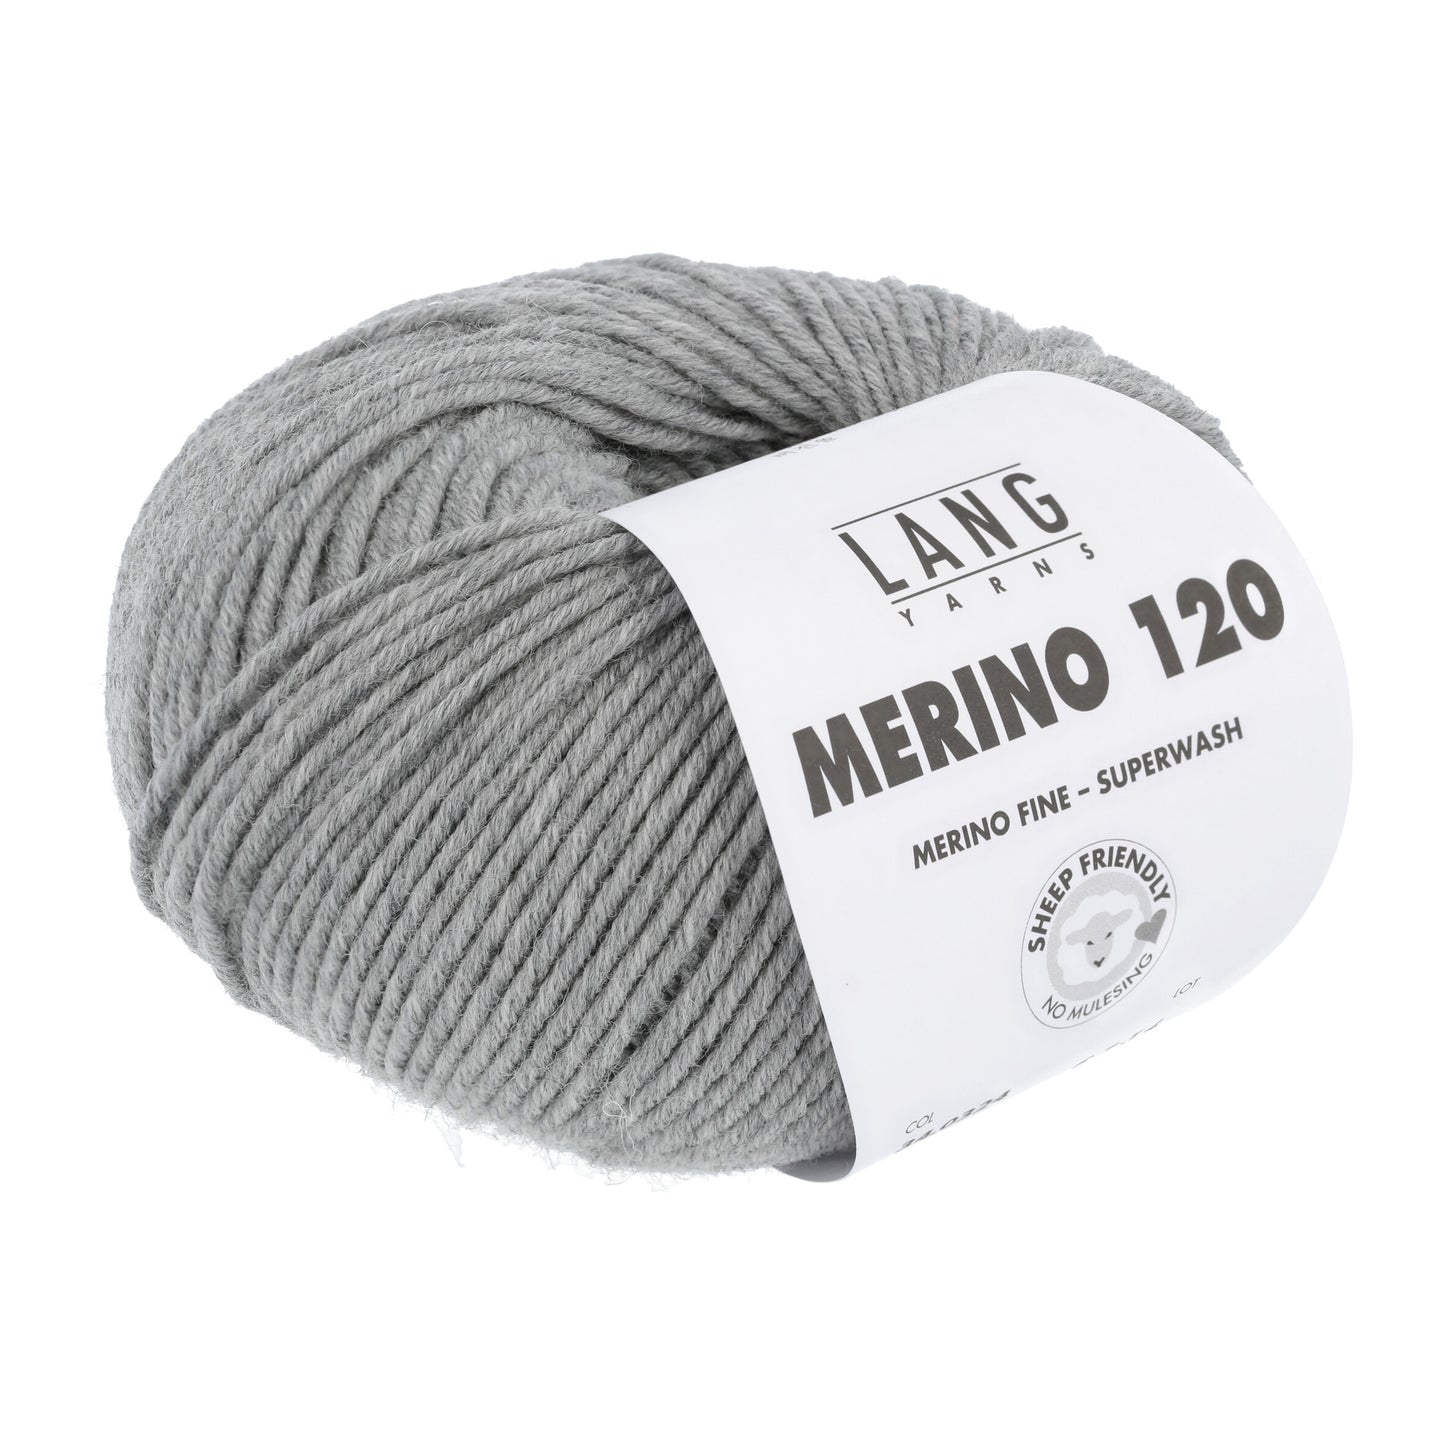 Lang Yarns Merino 120 / 34.0324